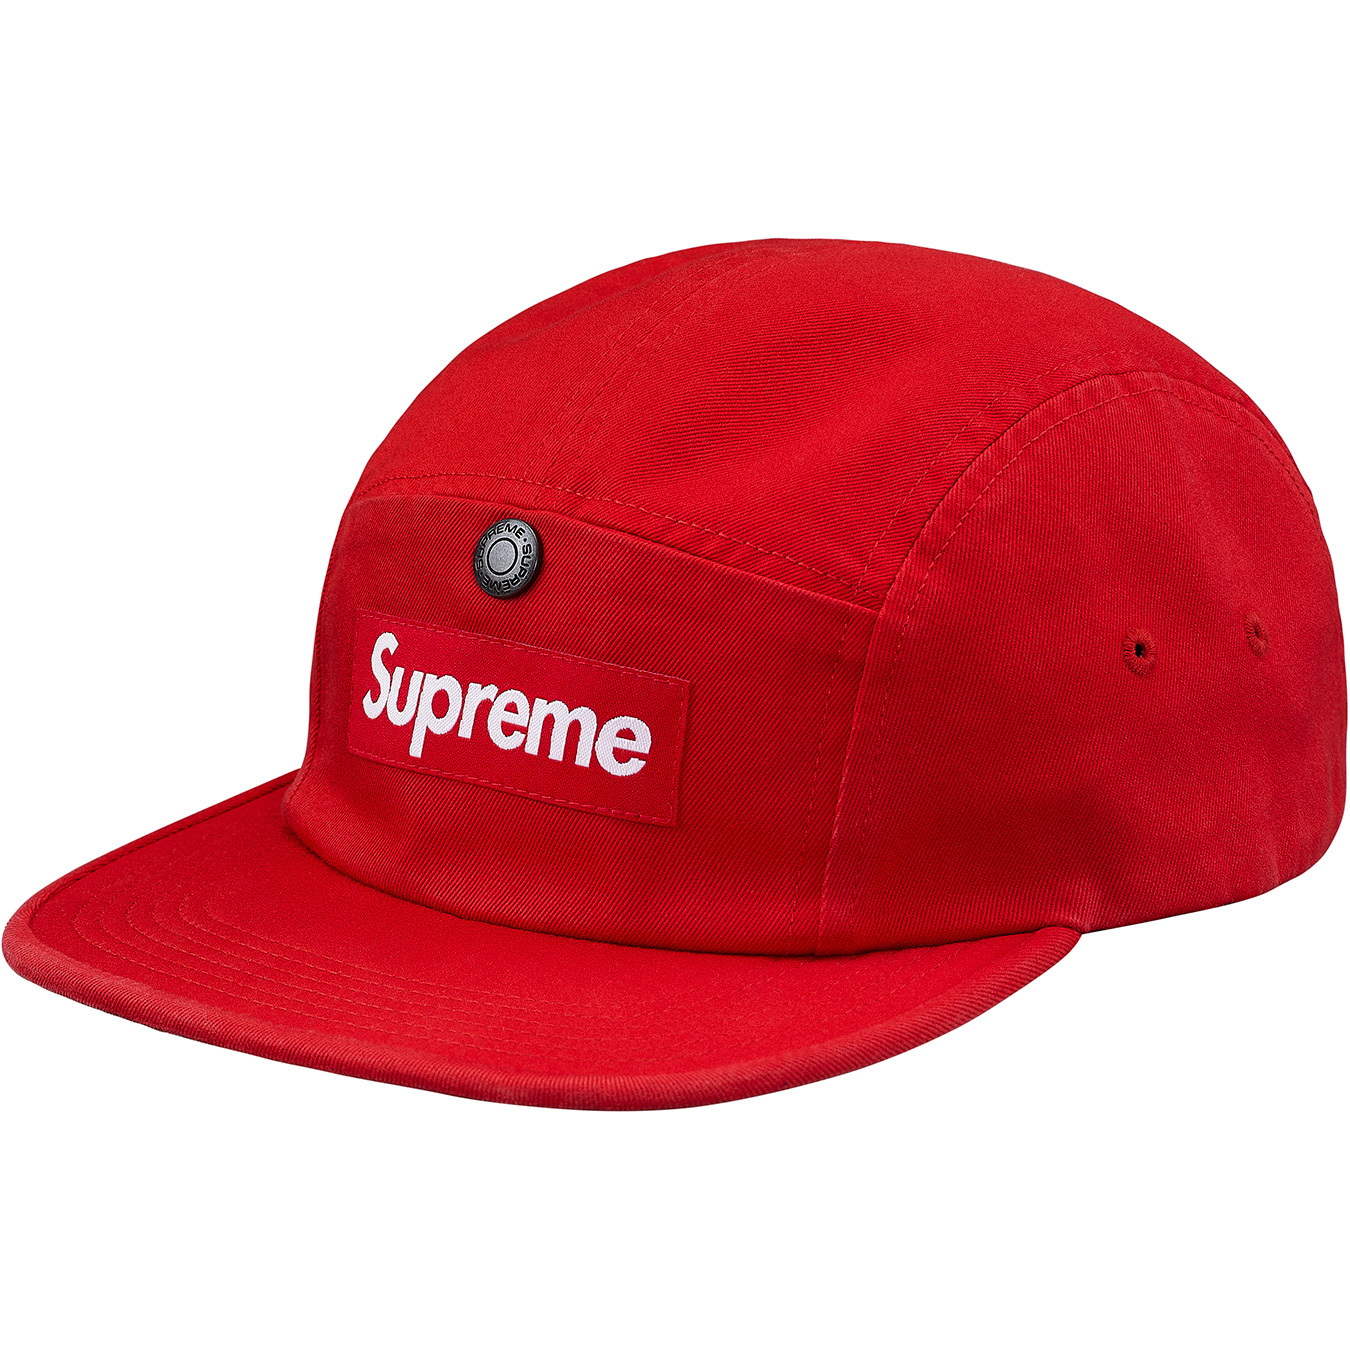 Supreme New York FW18 Red Snap Button Pocket Camp Cap Hat BOGO 100